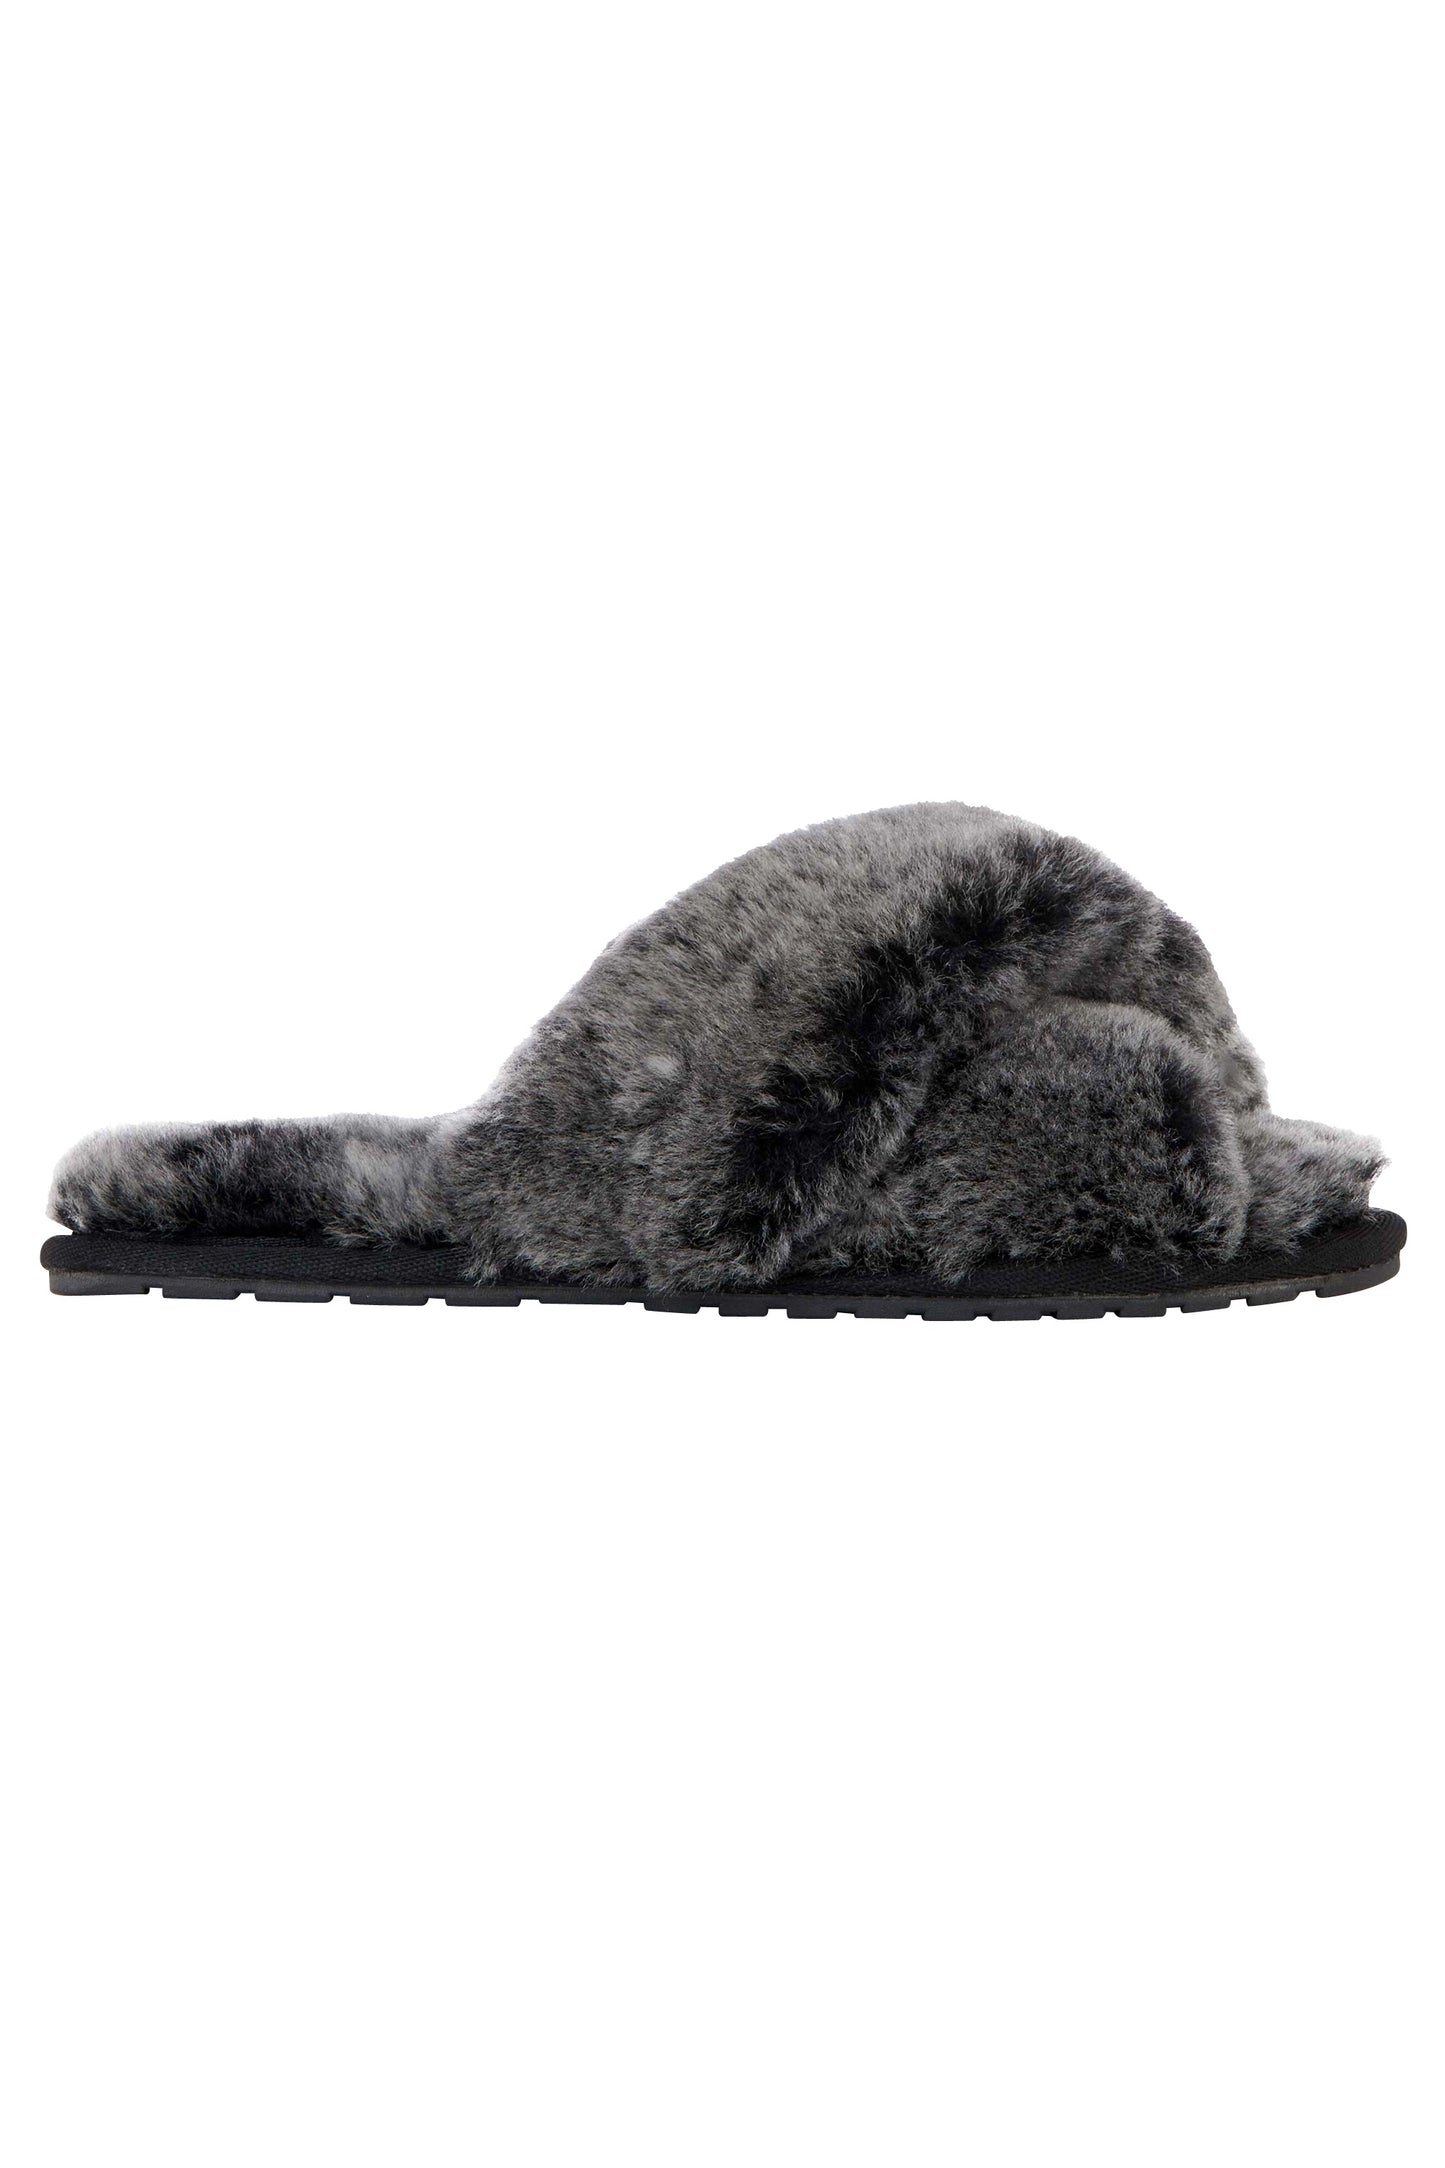 mayberry slipper | frost black | emu australia